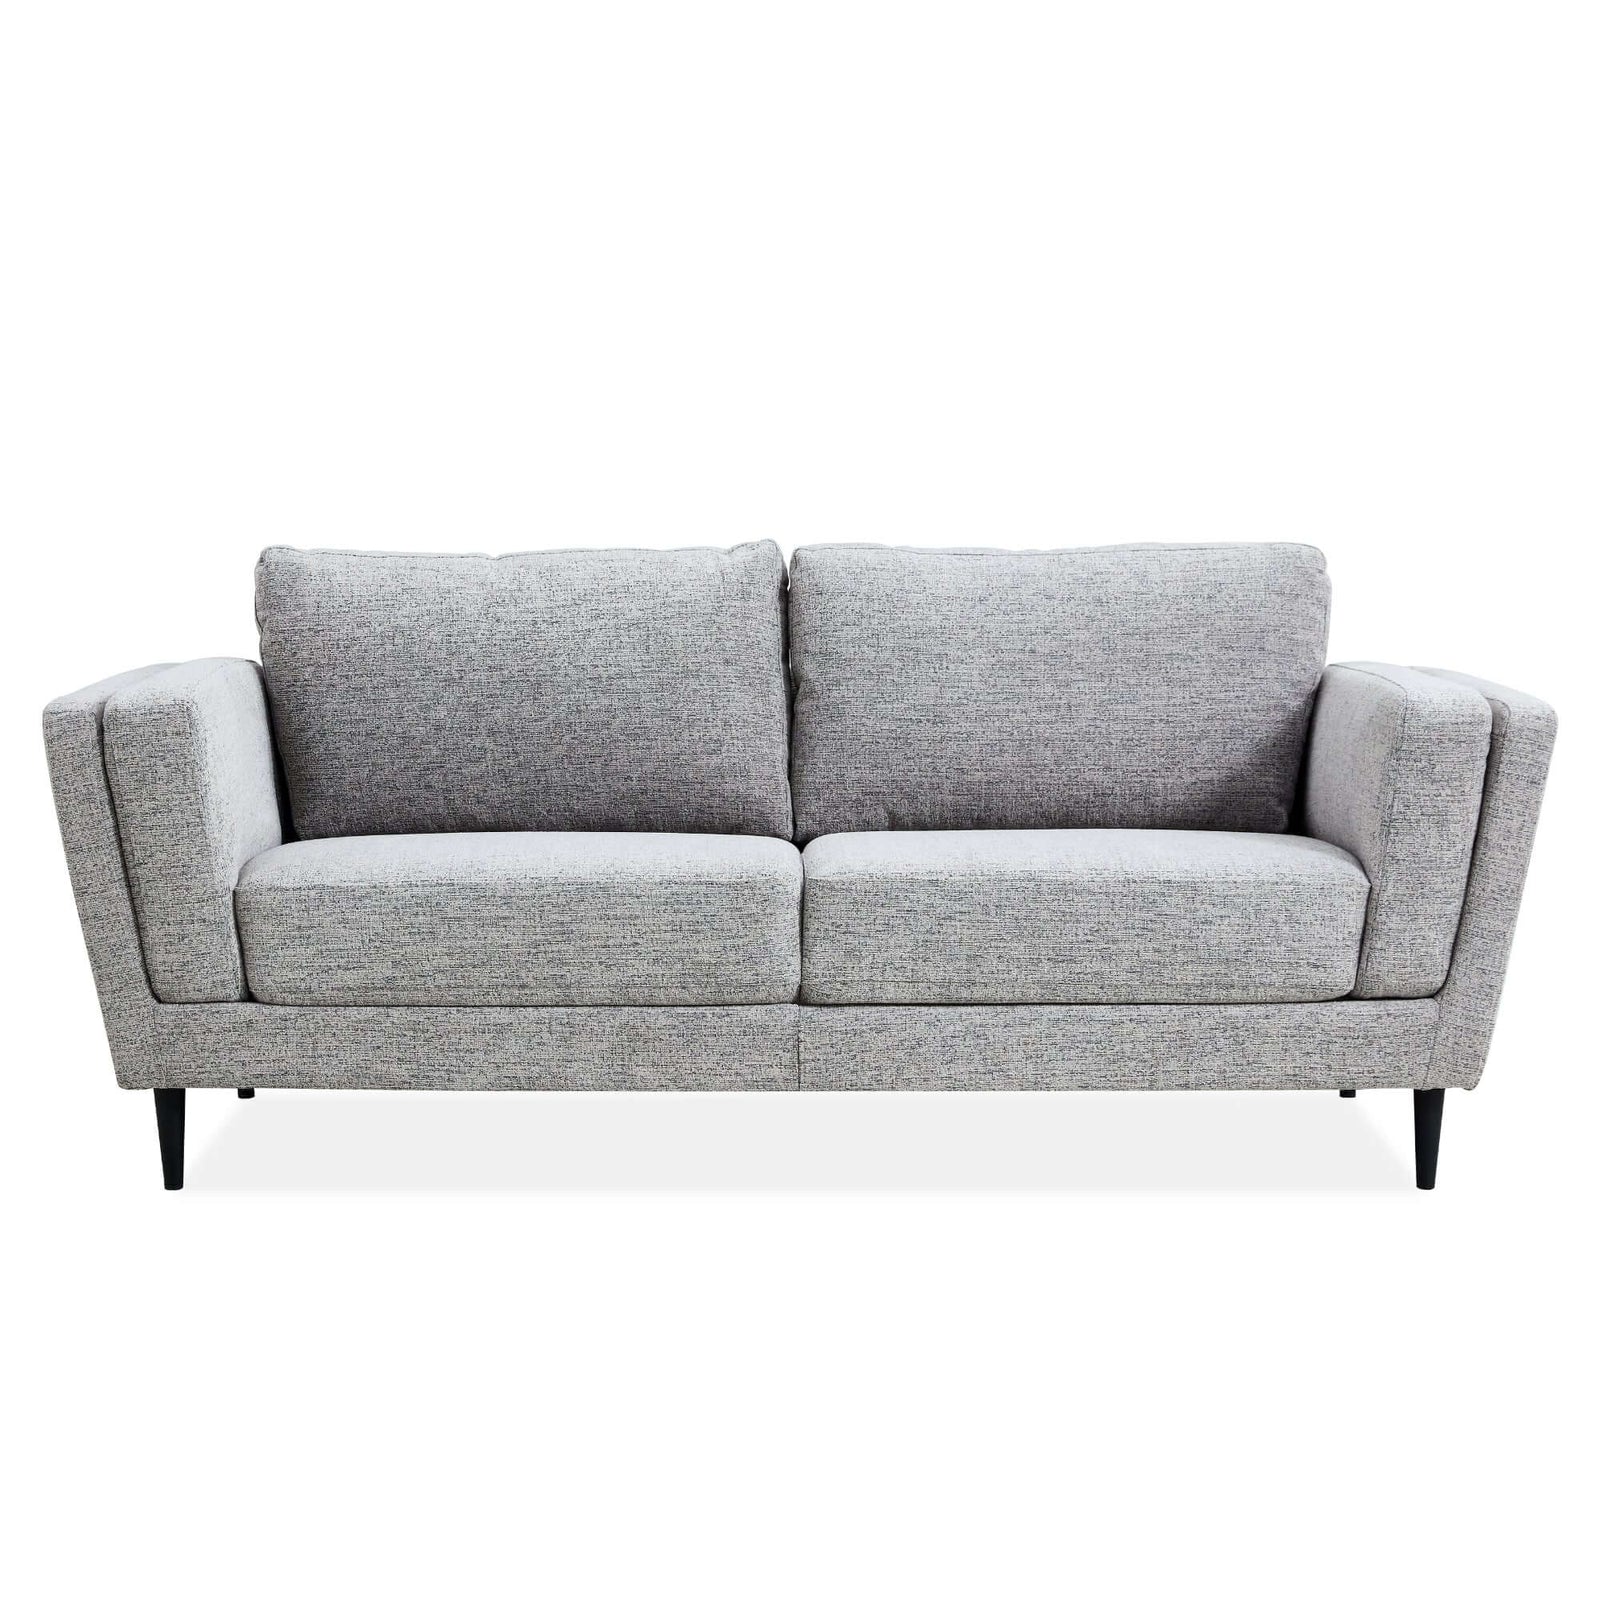 Skylar 3 Seater Sofa Fabric Uplholstered Lounge Couch - Pepper-Upinteriors